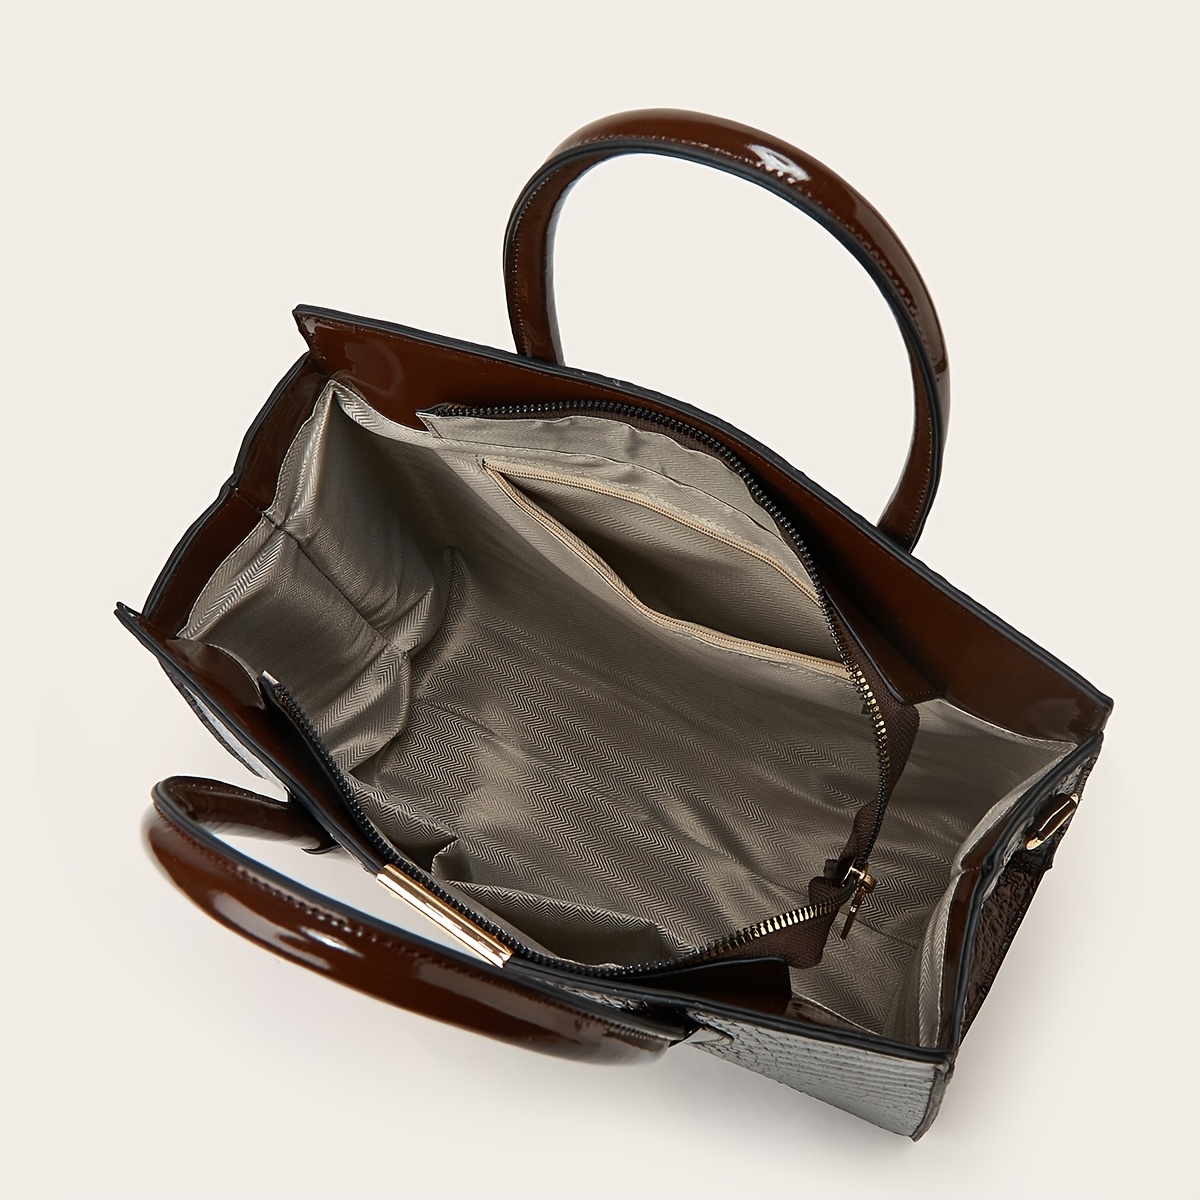 ZiMing Rectangle Handbags for Women Top-Handle Handbag Crocodile Pattern  Leather Purse Satchel Long Tote Bags Shoulder Bag